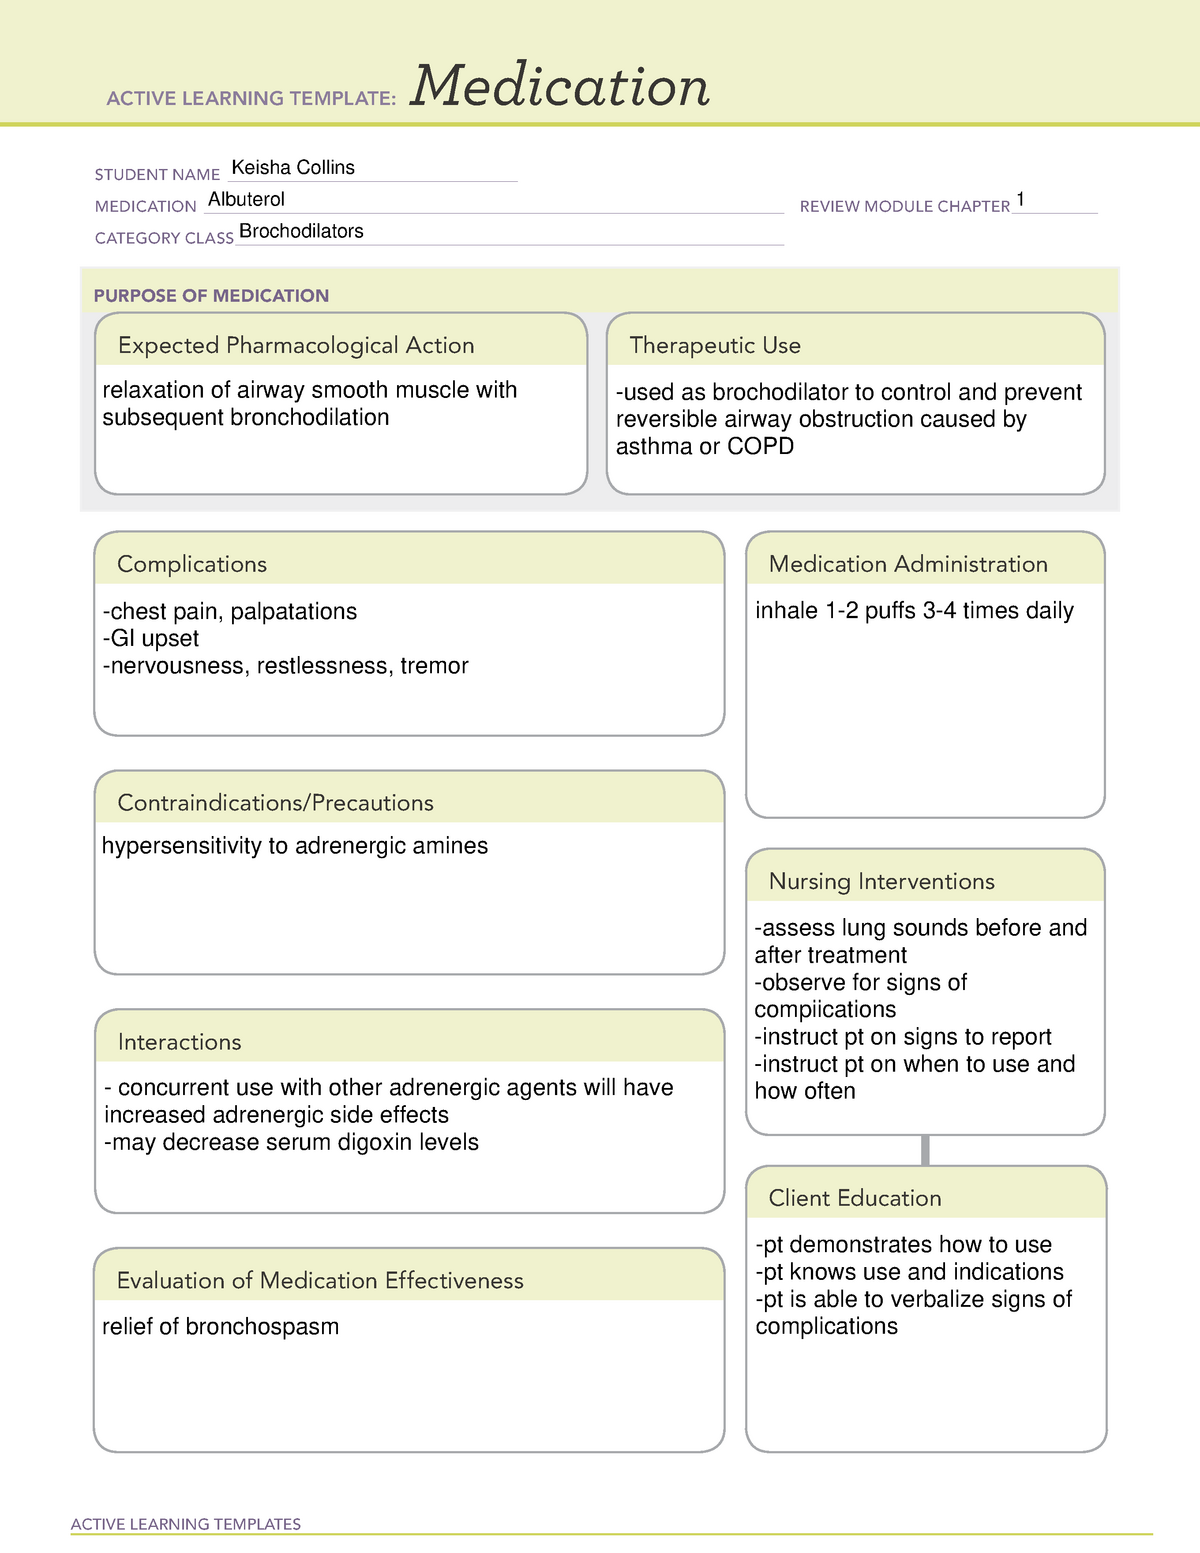 Albuterol medication template ACTIVE LEARNING TEMPLATES Medication